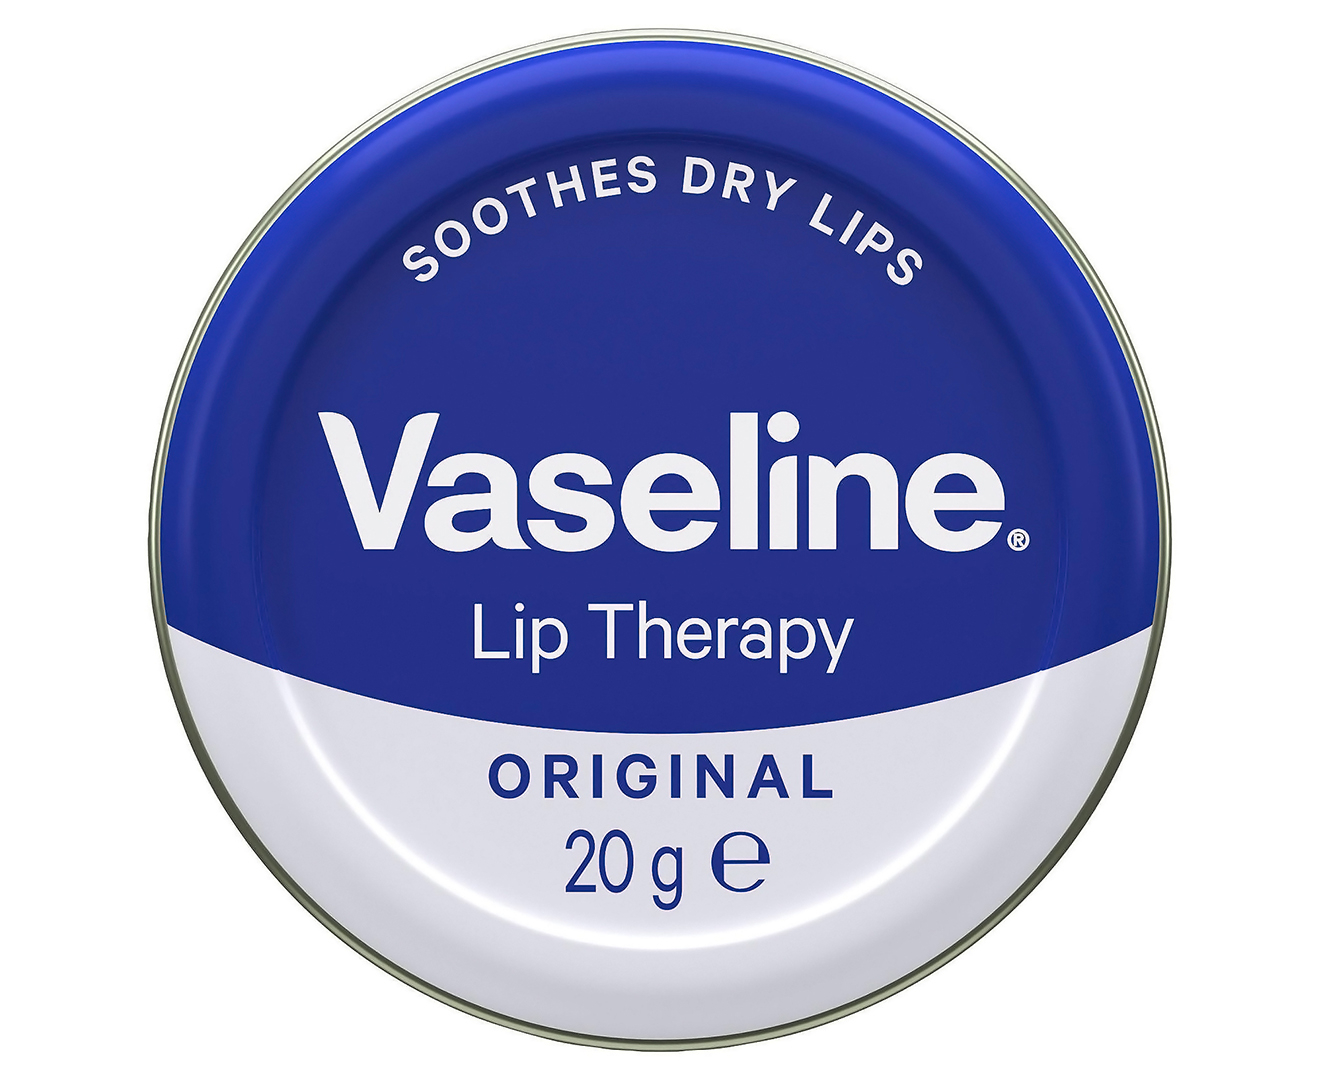 Vaseline Original Lip Therapy Petroleum Jelly 20g